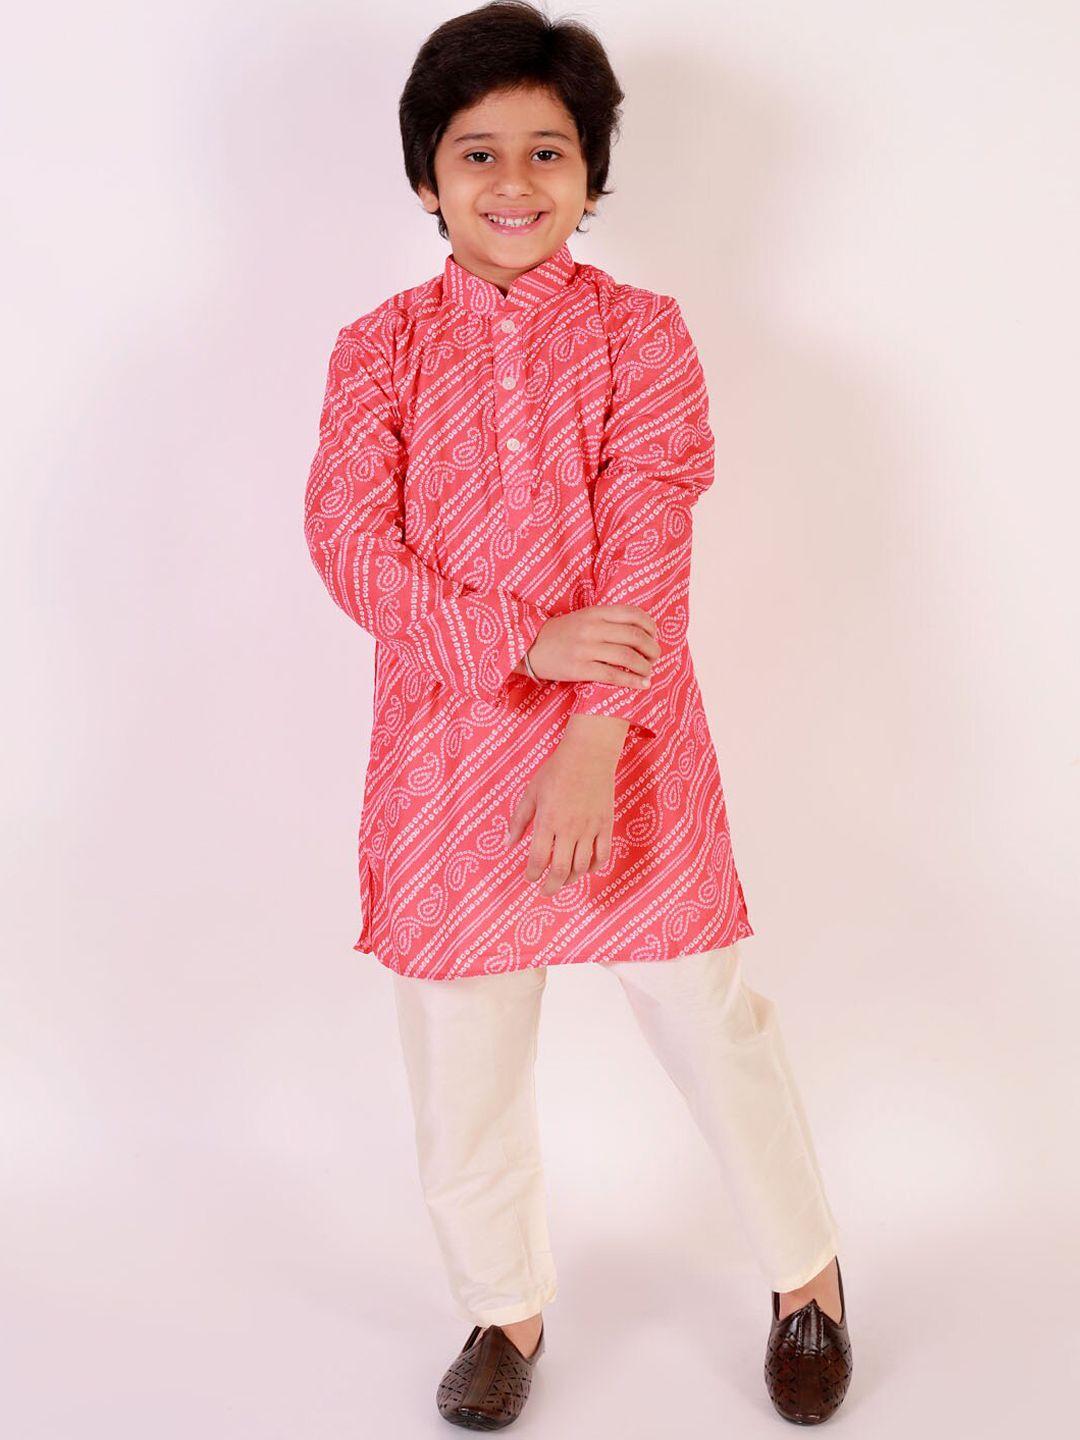 jbn creation boys bandhani printed kurta with pyjamas